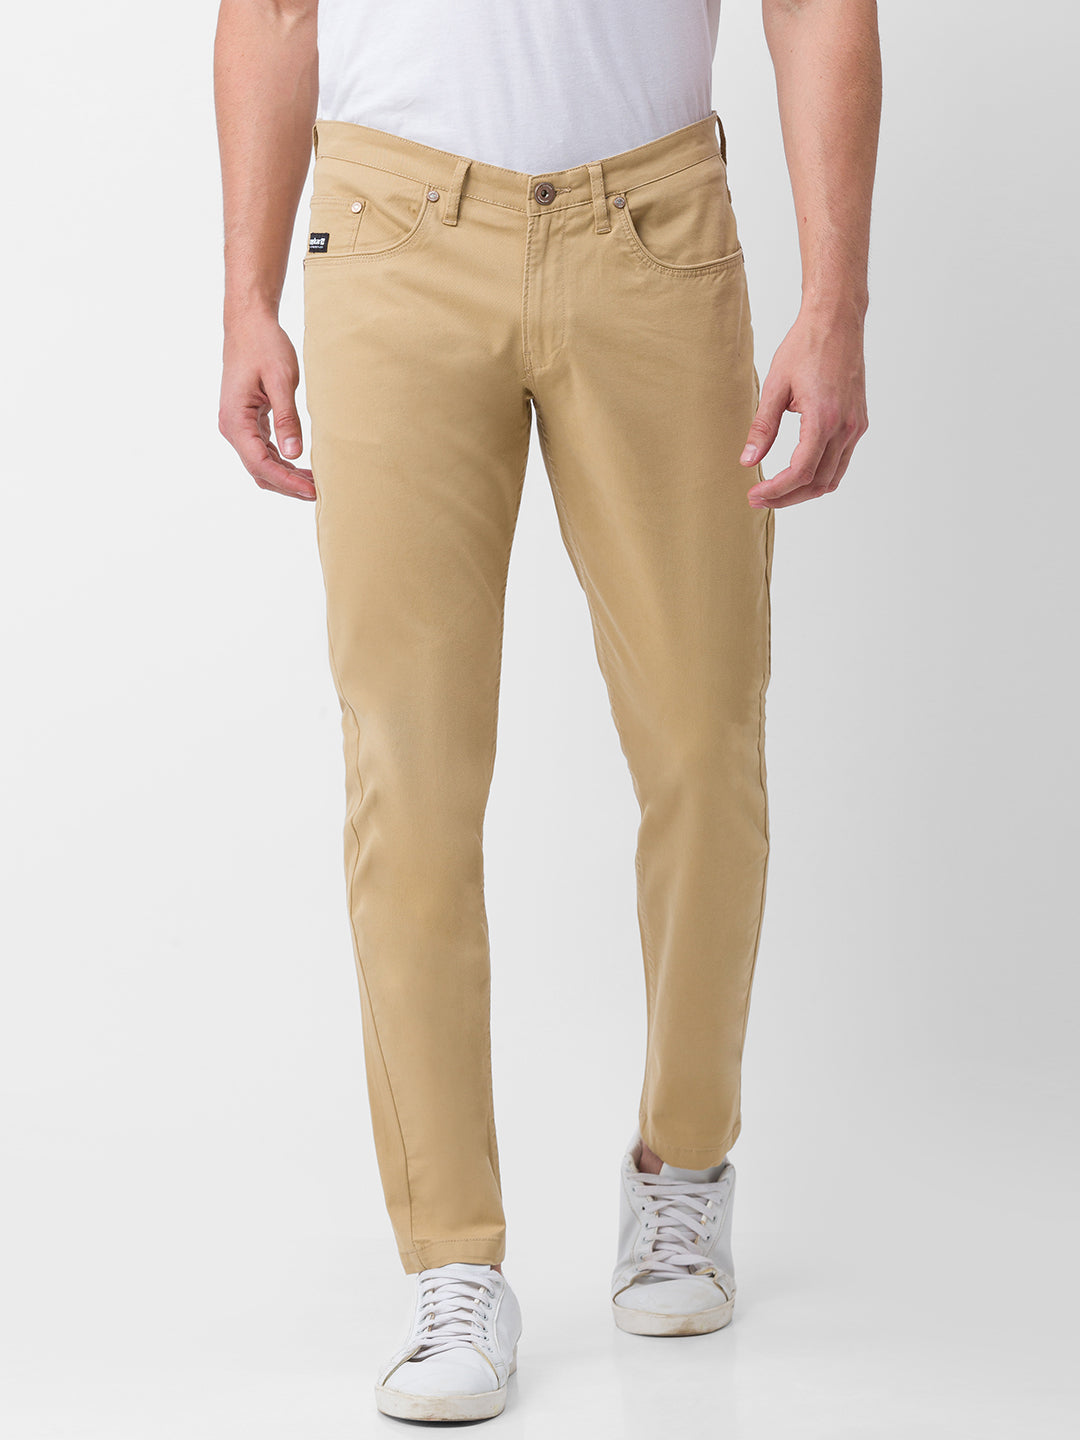 Buy Online|Spykar Men Light Grey Cotton Slim Fit Ankle Length Plain Trousers